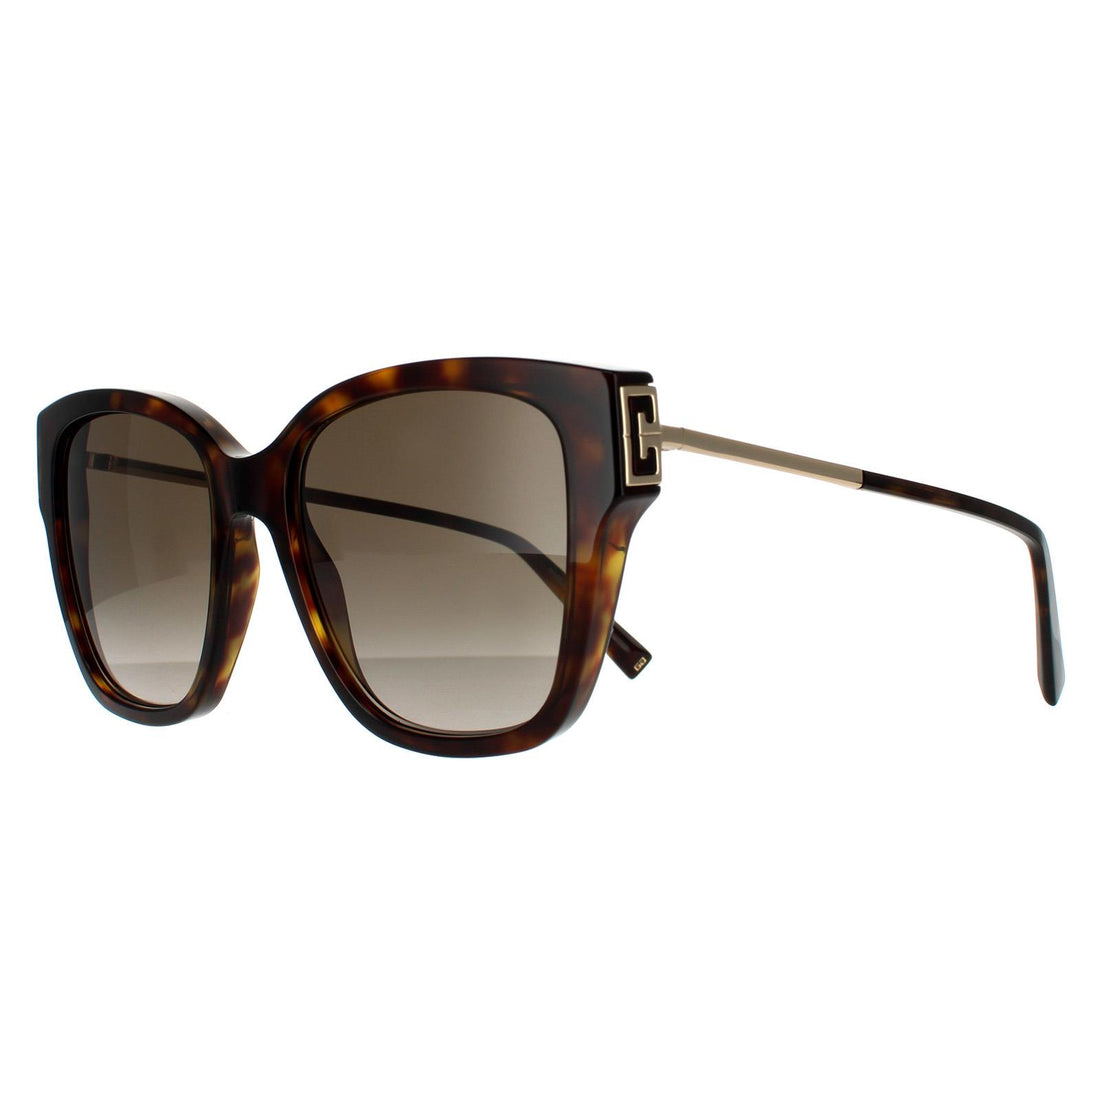 Givenchy Sunglasses GV7191/S 086 HA Havana Brown Gradient